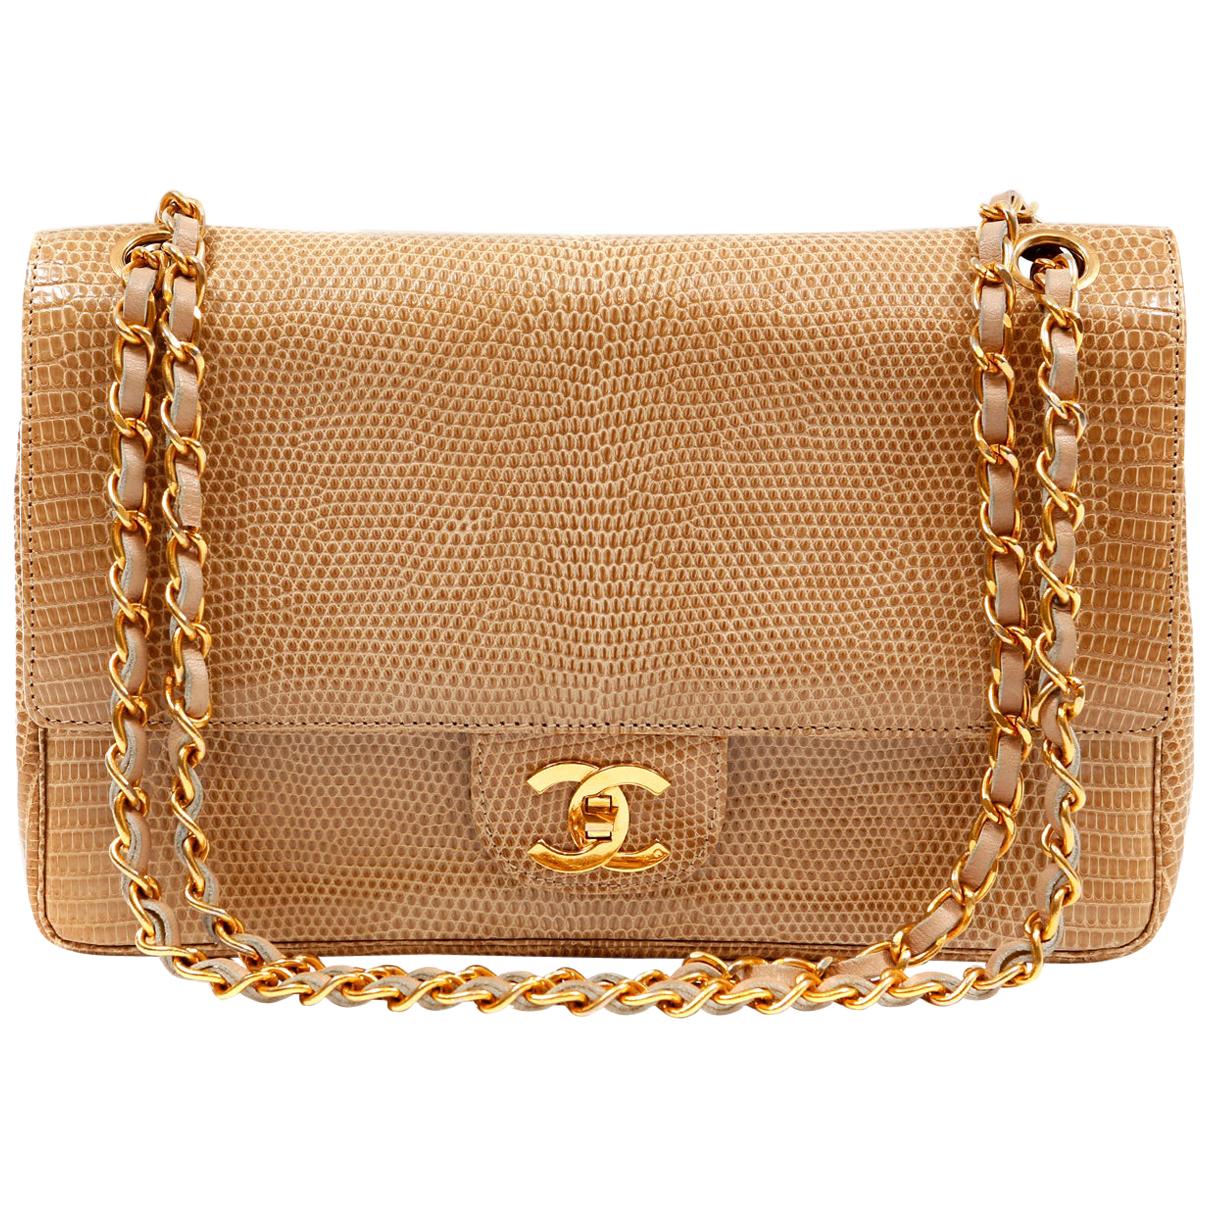 Chanel Beige Lizard Medium Classic Double Flap Vintage Bag at